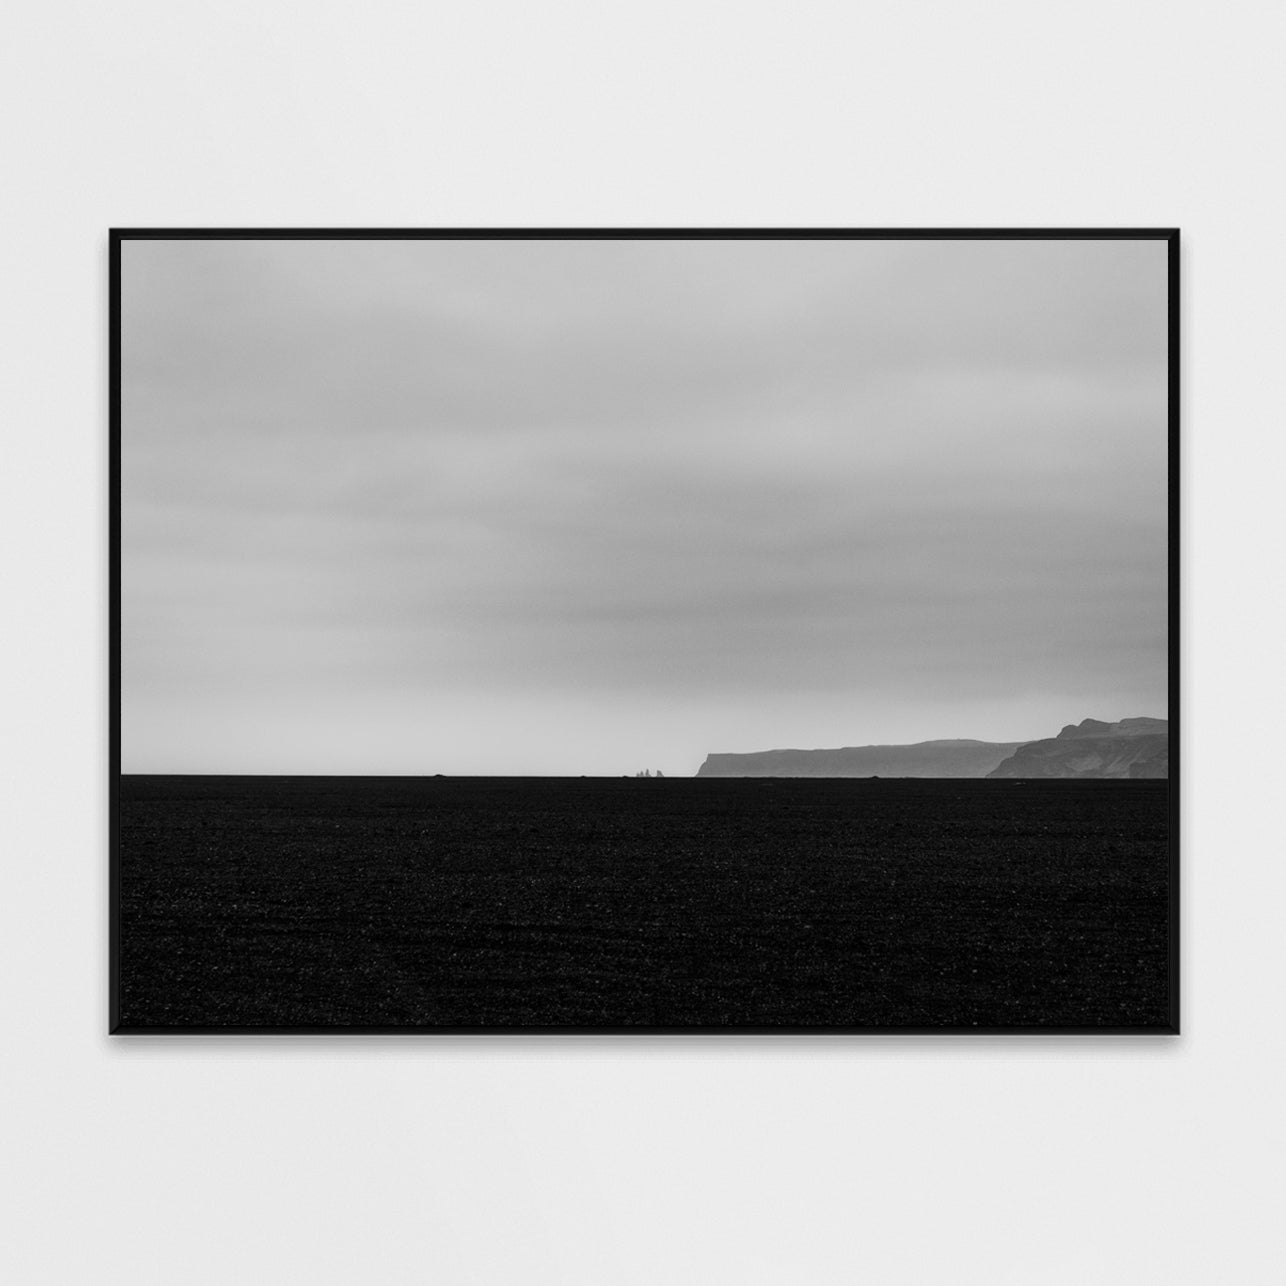 Bestselling Posters minimal nordic landscape in Iceland black beach Vik art poster 50x70cm by Minumo